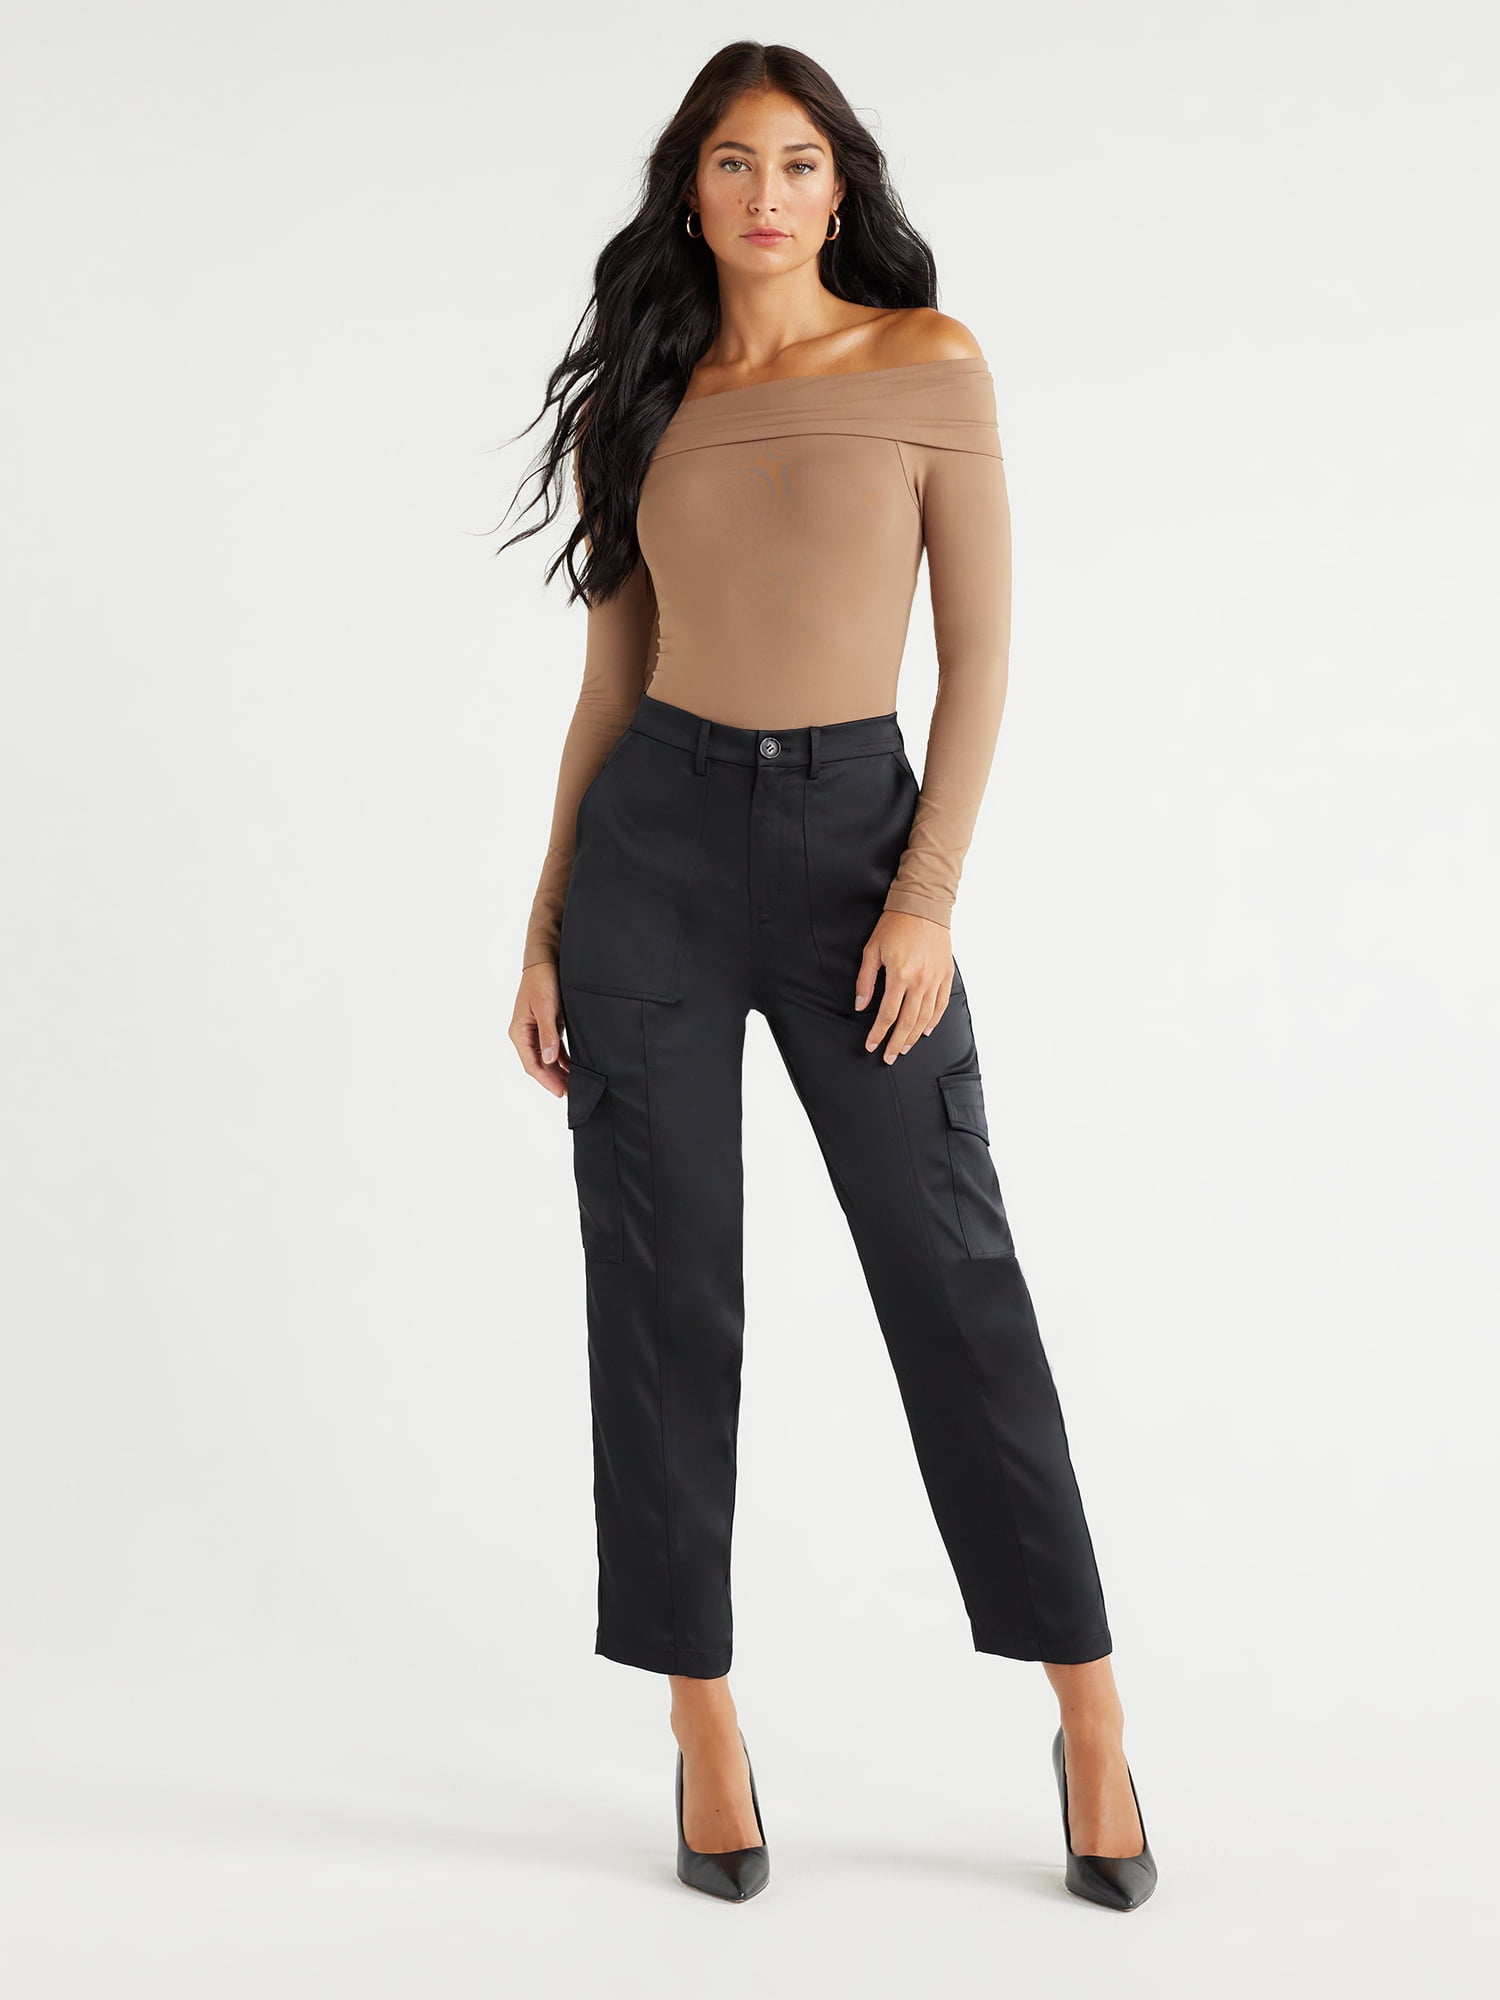 Sofia Jeans Women's High Rise Satin Cargo Pants, 27 Inseam, Sizes 00-22 